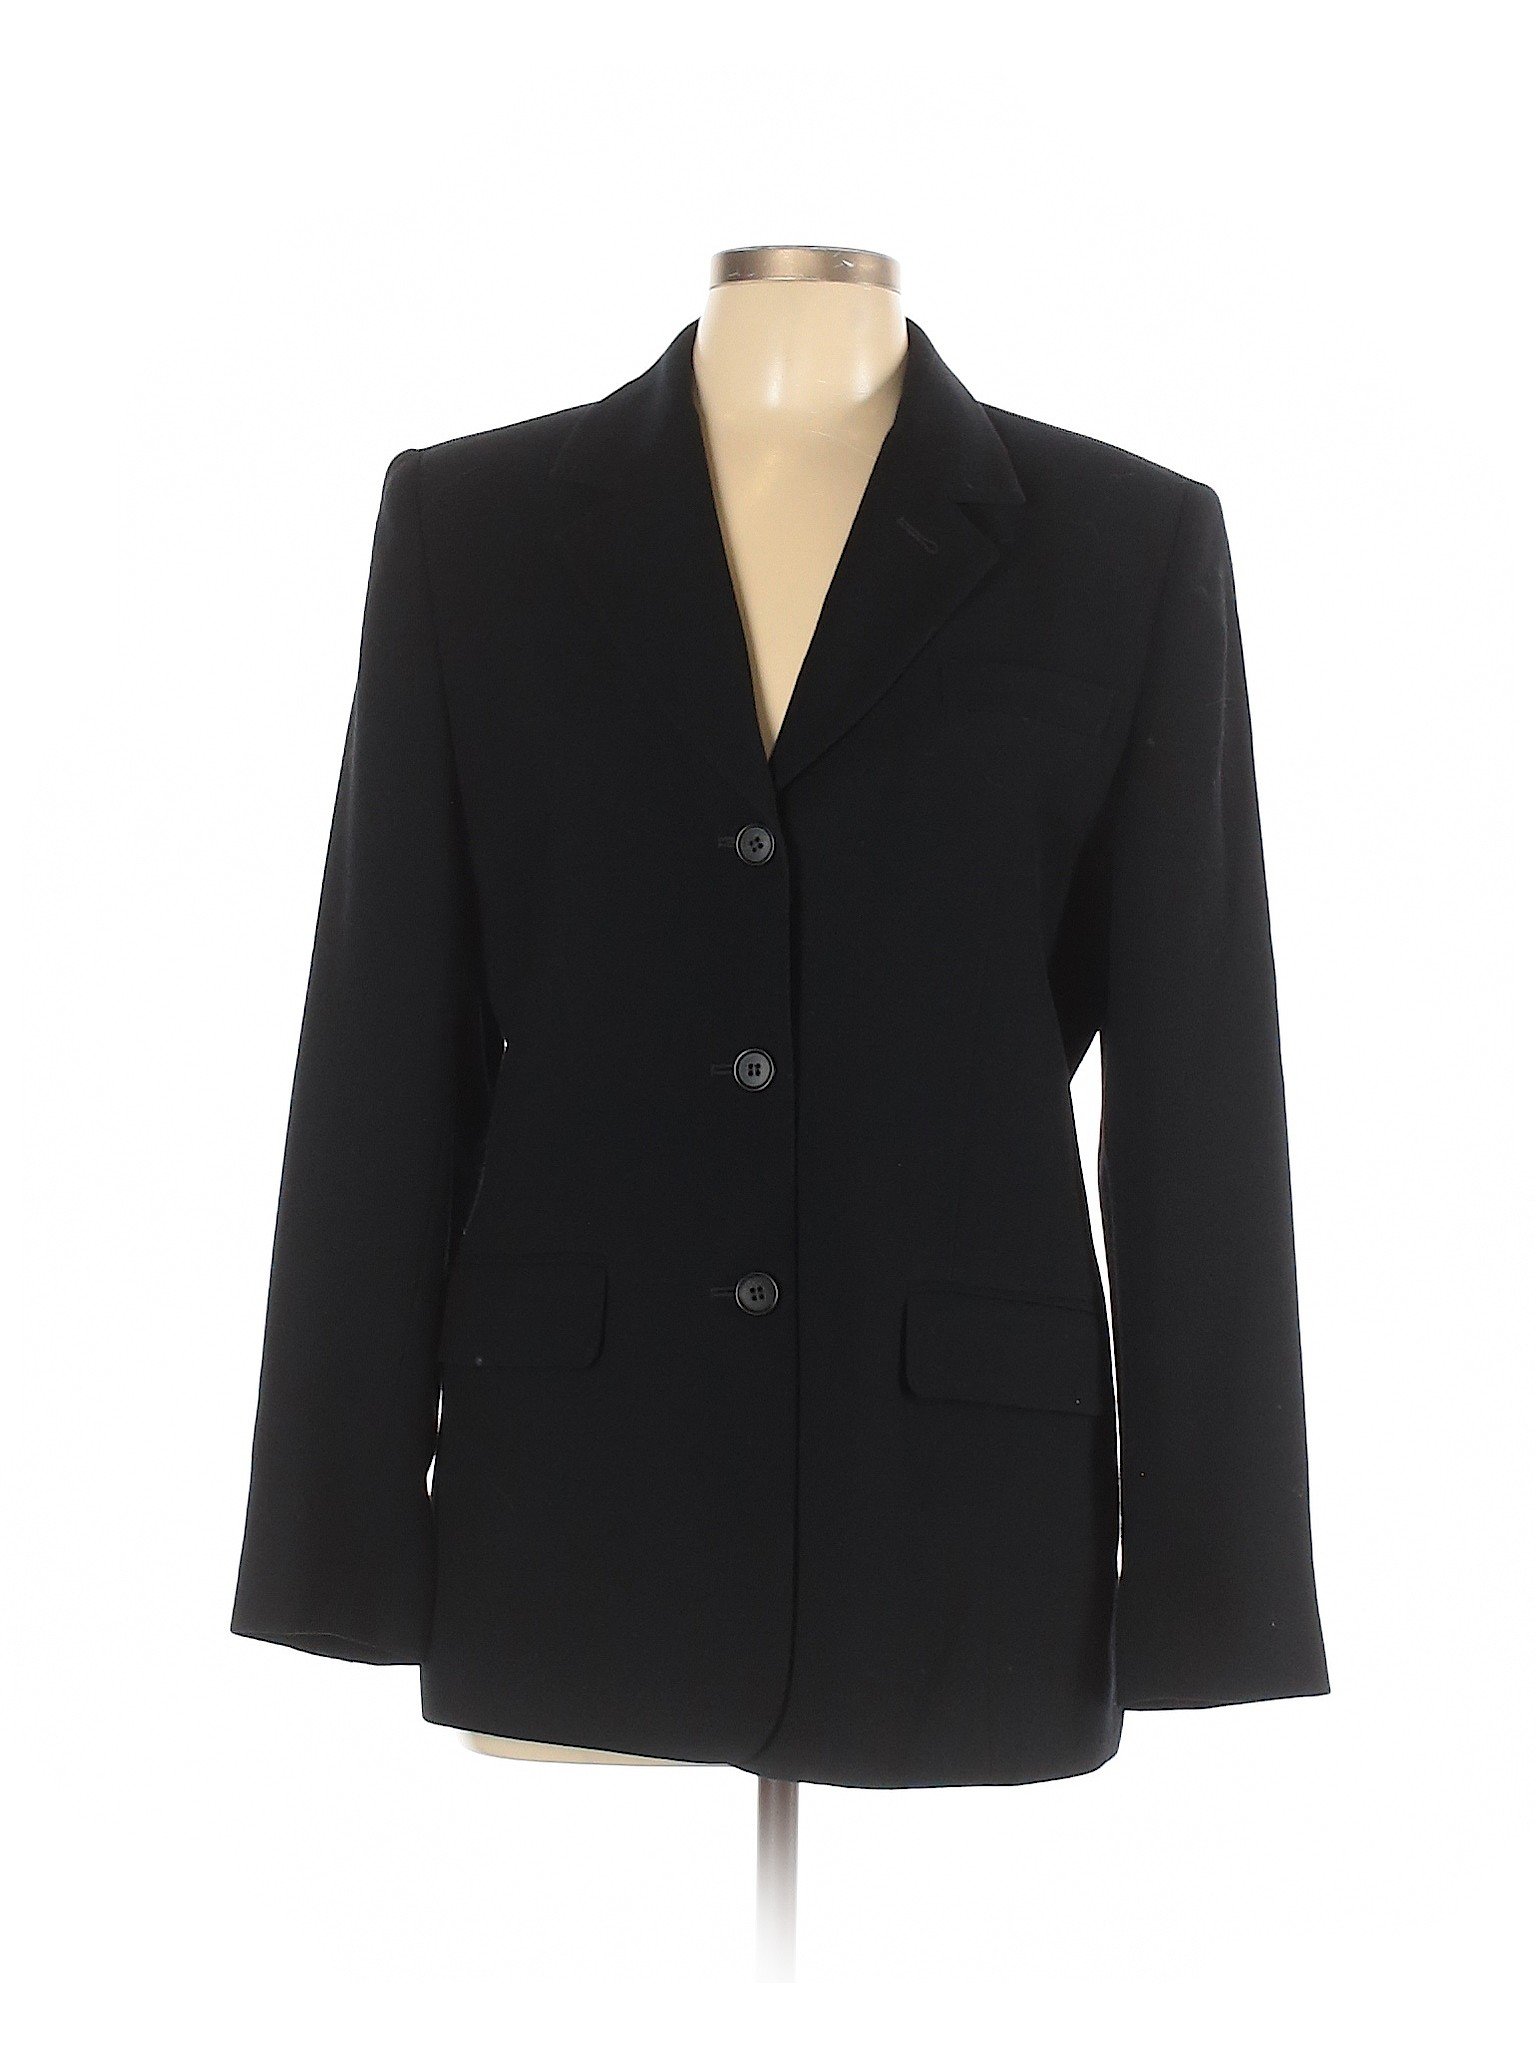 Talbots Women Black Wool Blazer 12 | eBay